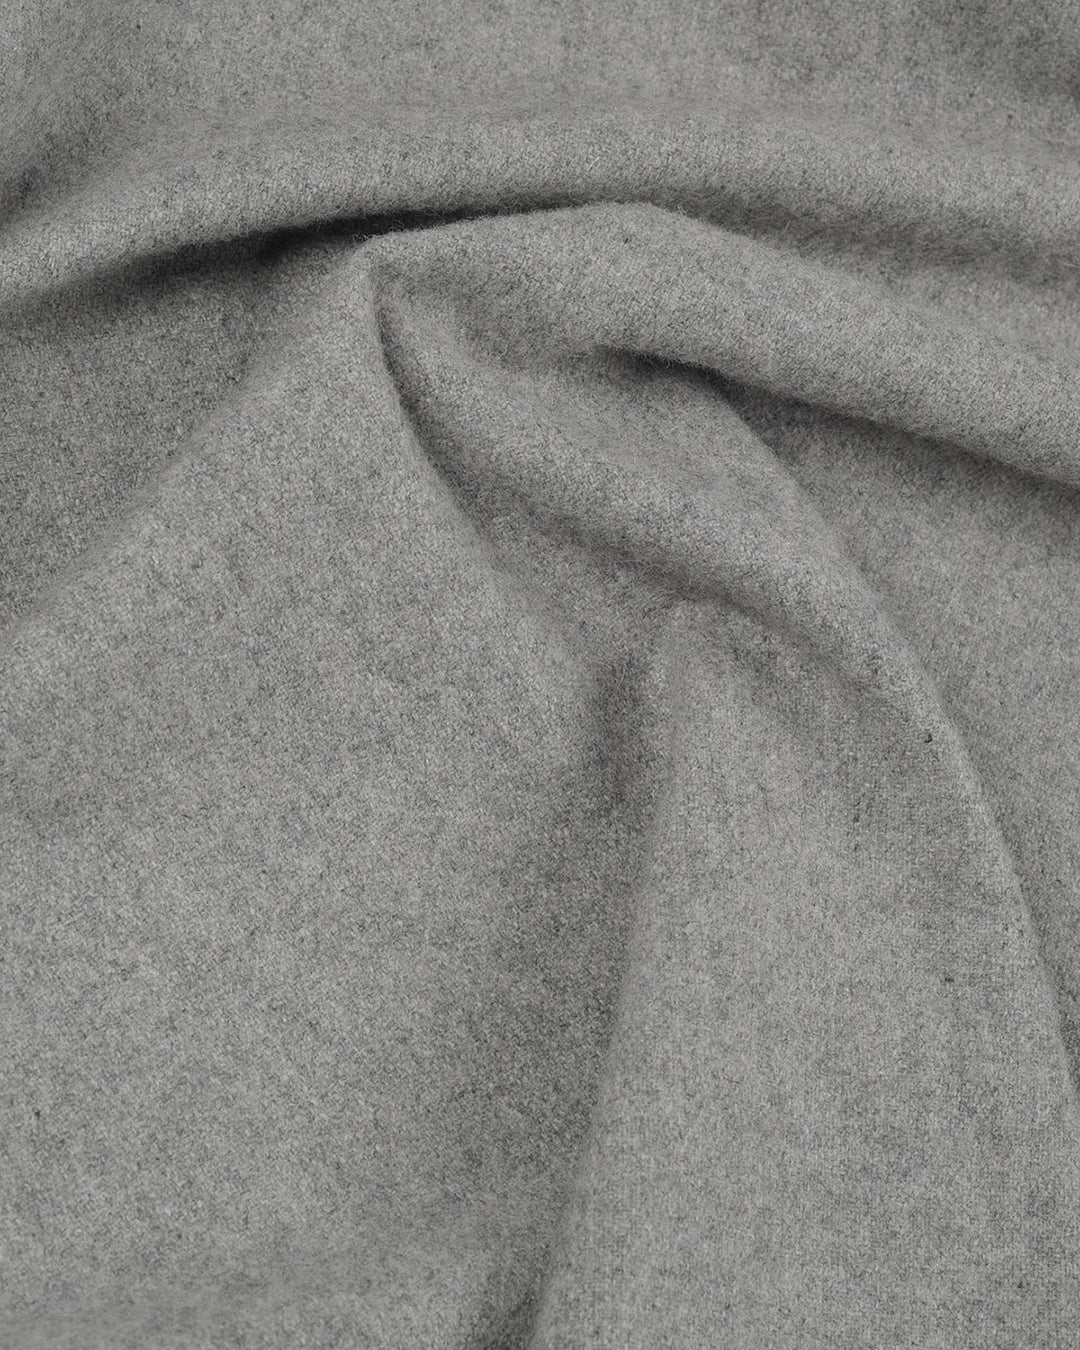 Gurkha Pant in Grey Wool Flannel